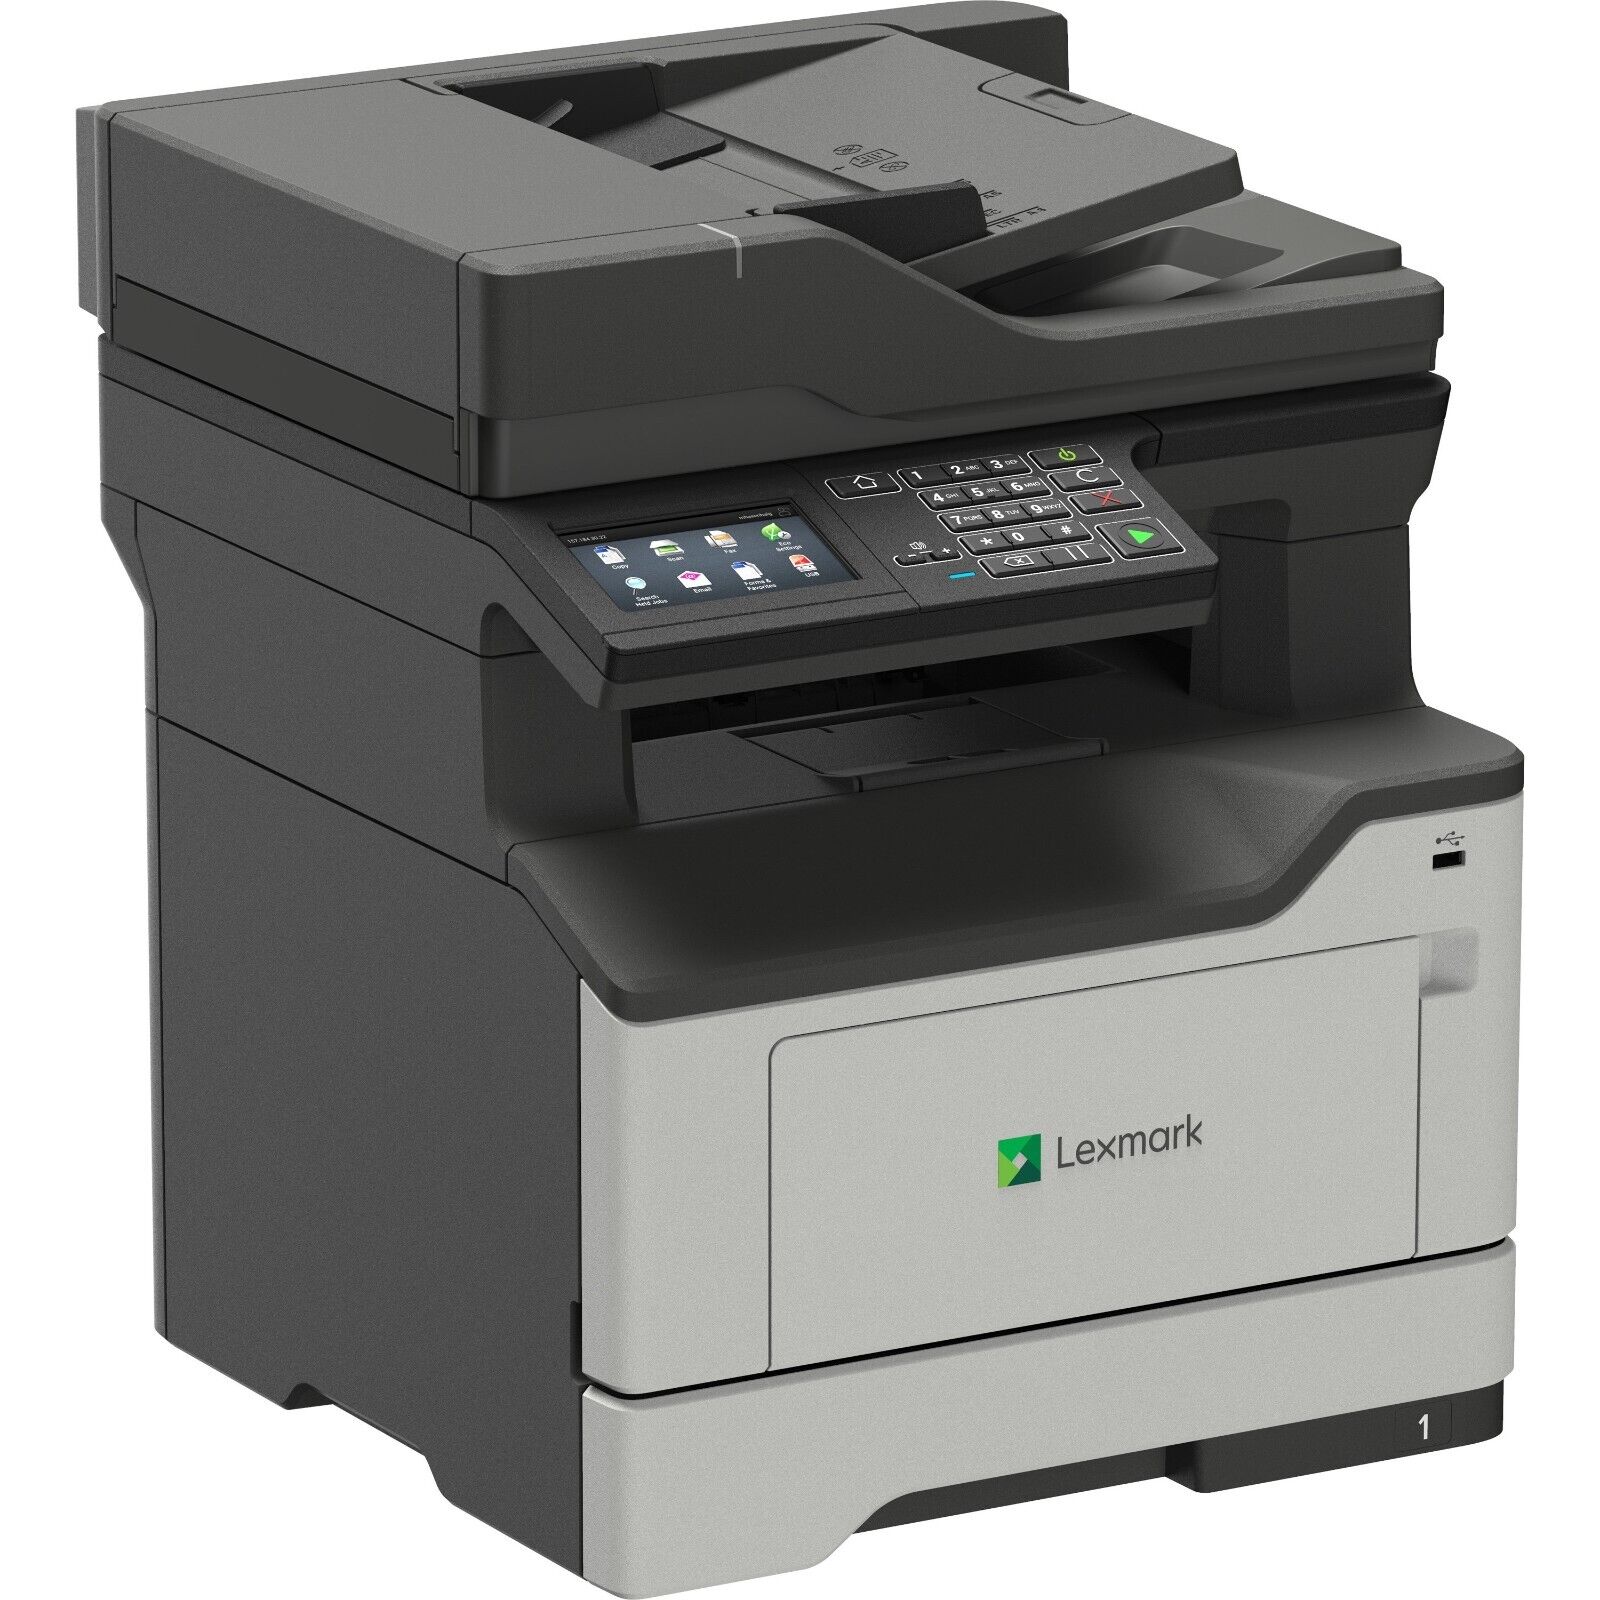 NEW Lexmark Mx421ade MFP Laser Printer copy scan  36S0733 42PPM